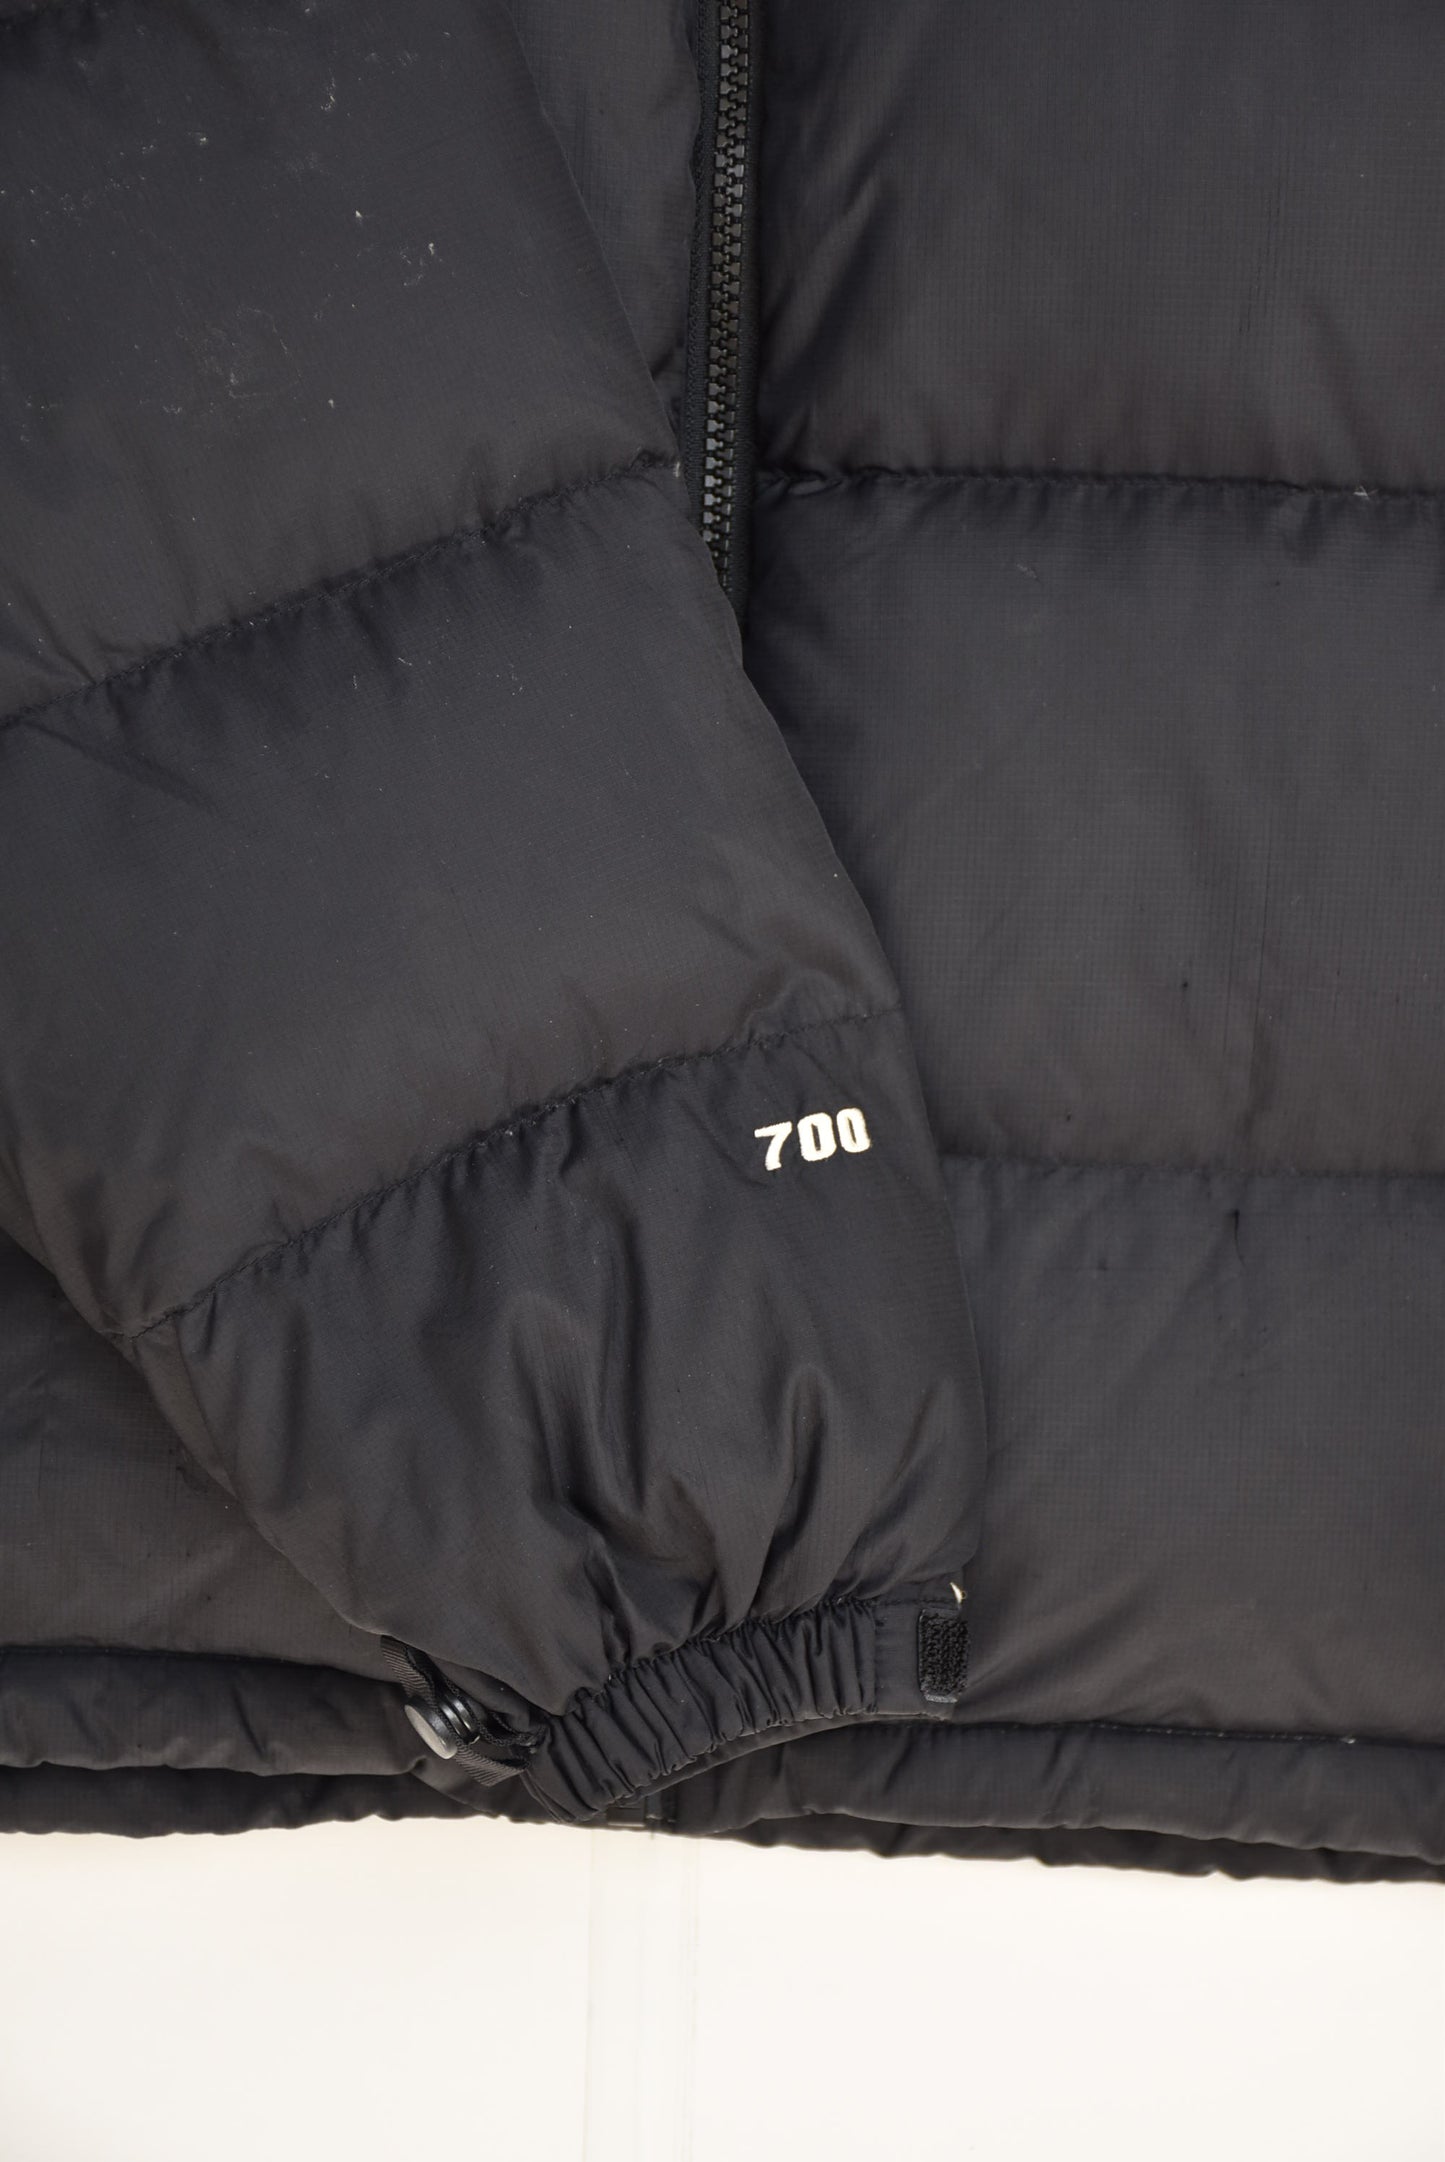 The North Face 700 Puffer (Women's XL)